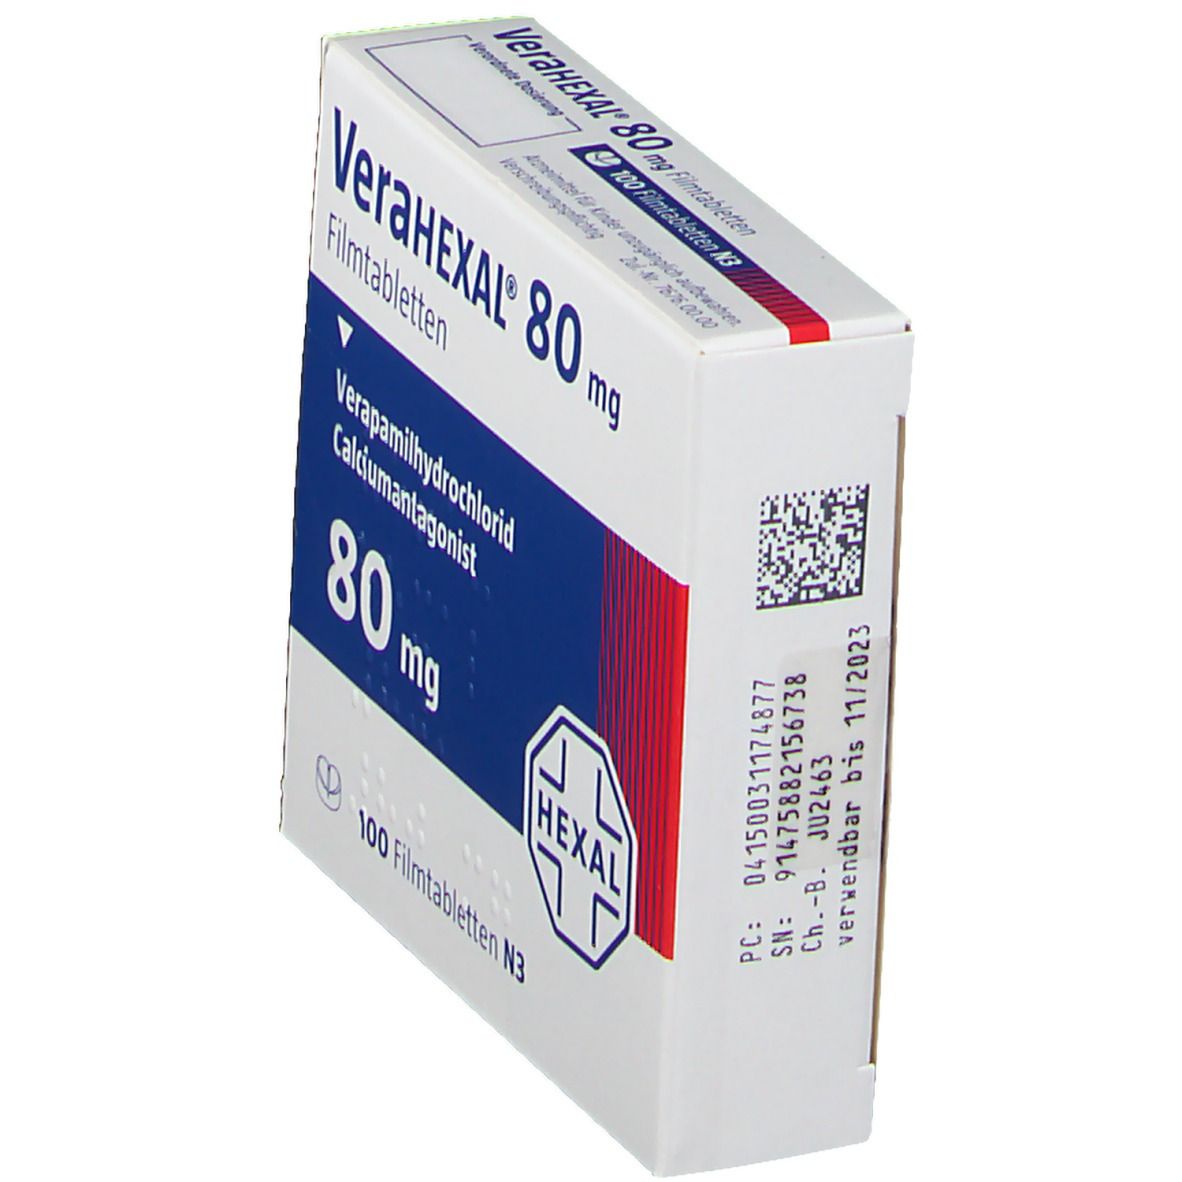 VeraHEXAL® 80 mg